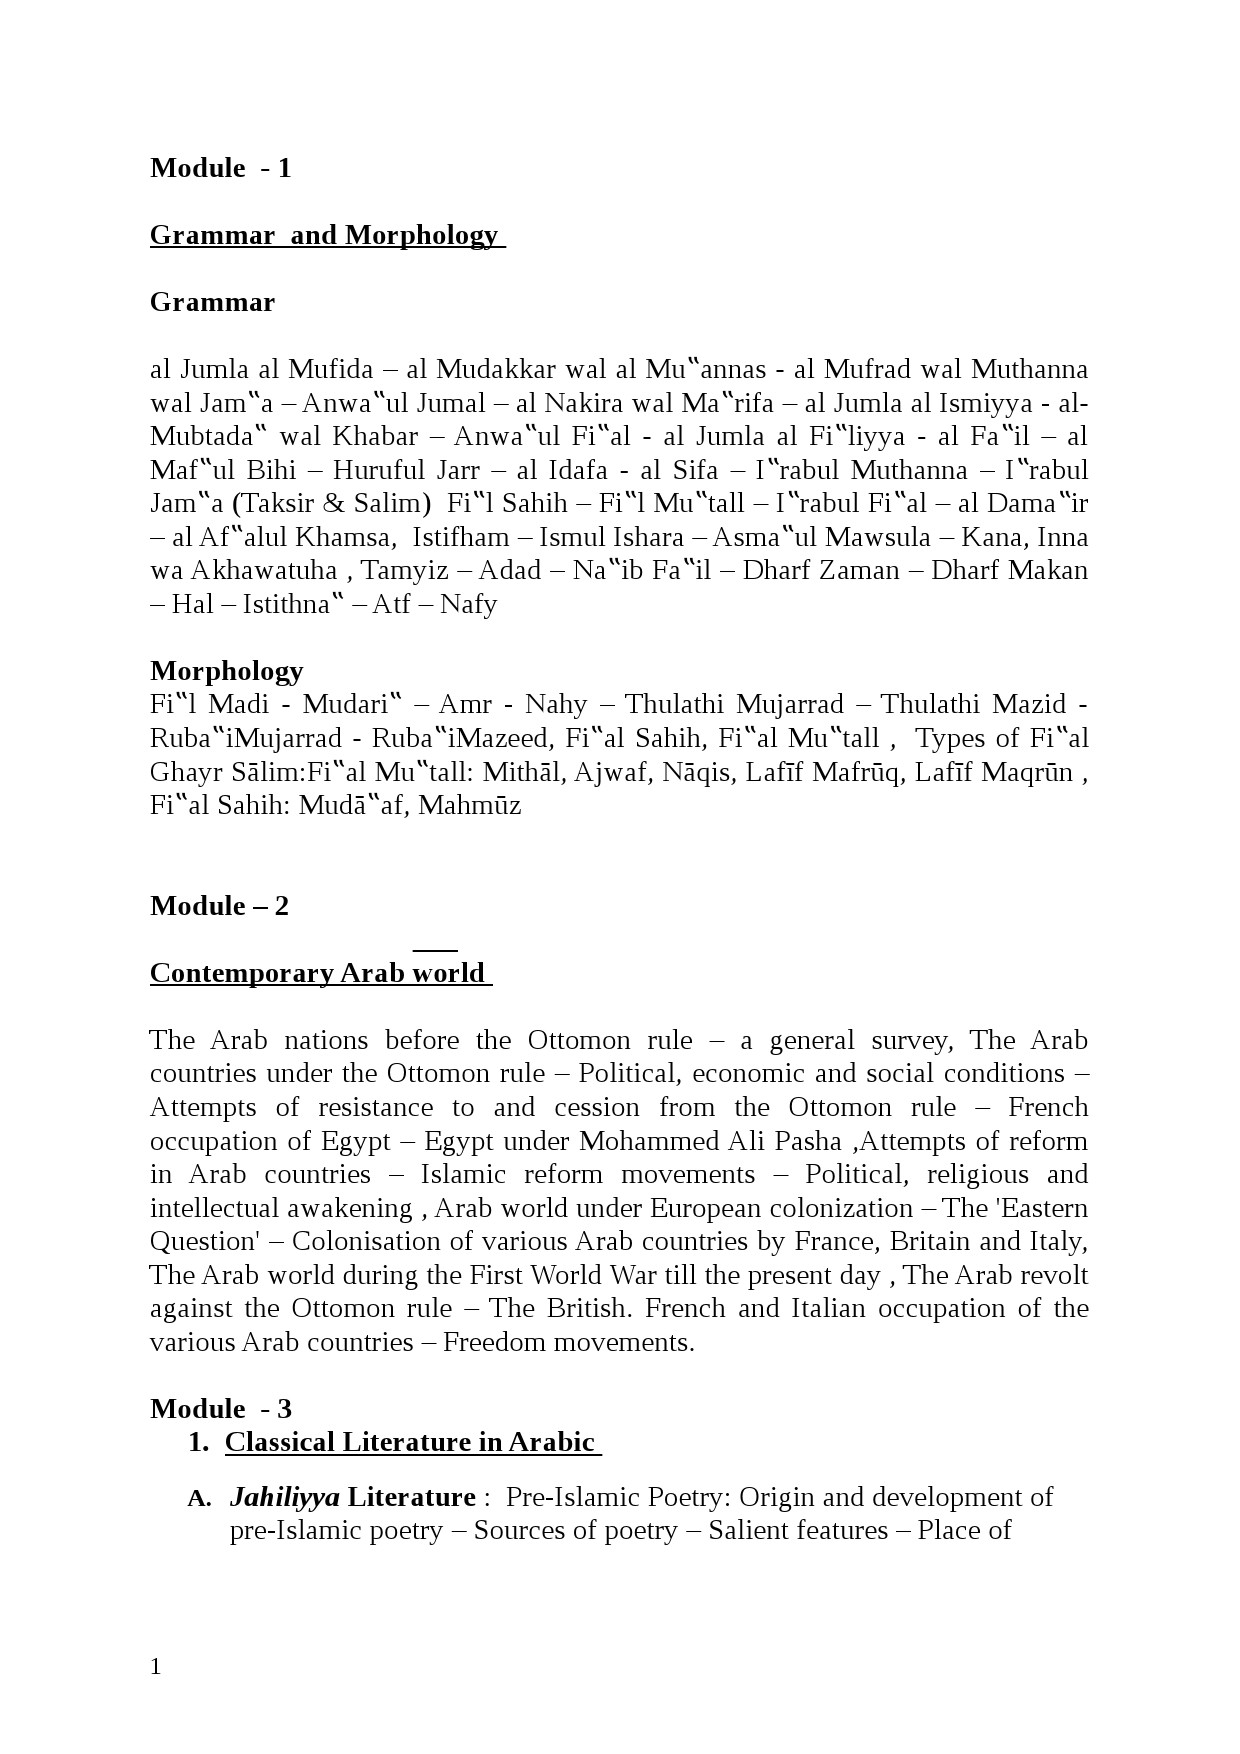 Kerala PSC Assistant Professor Arabic Exam Revised Syllabus - Notification Image 1